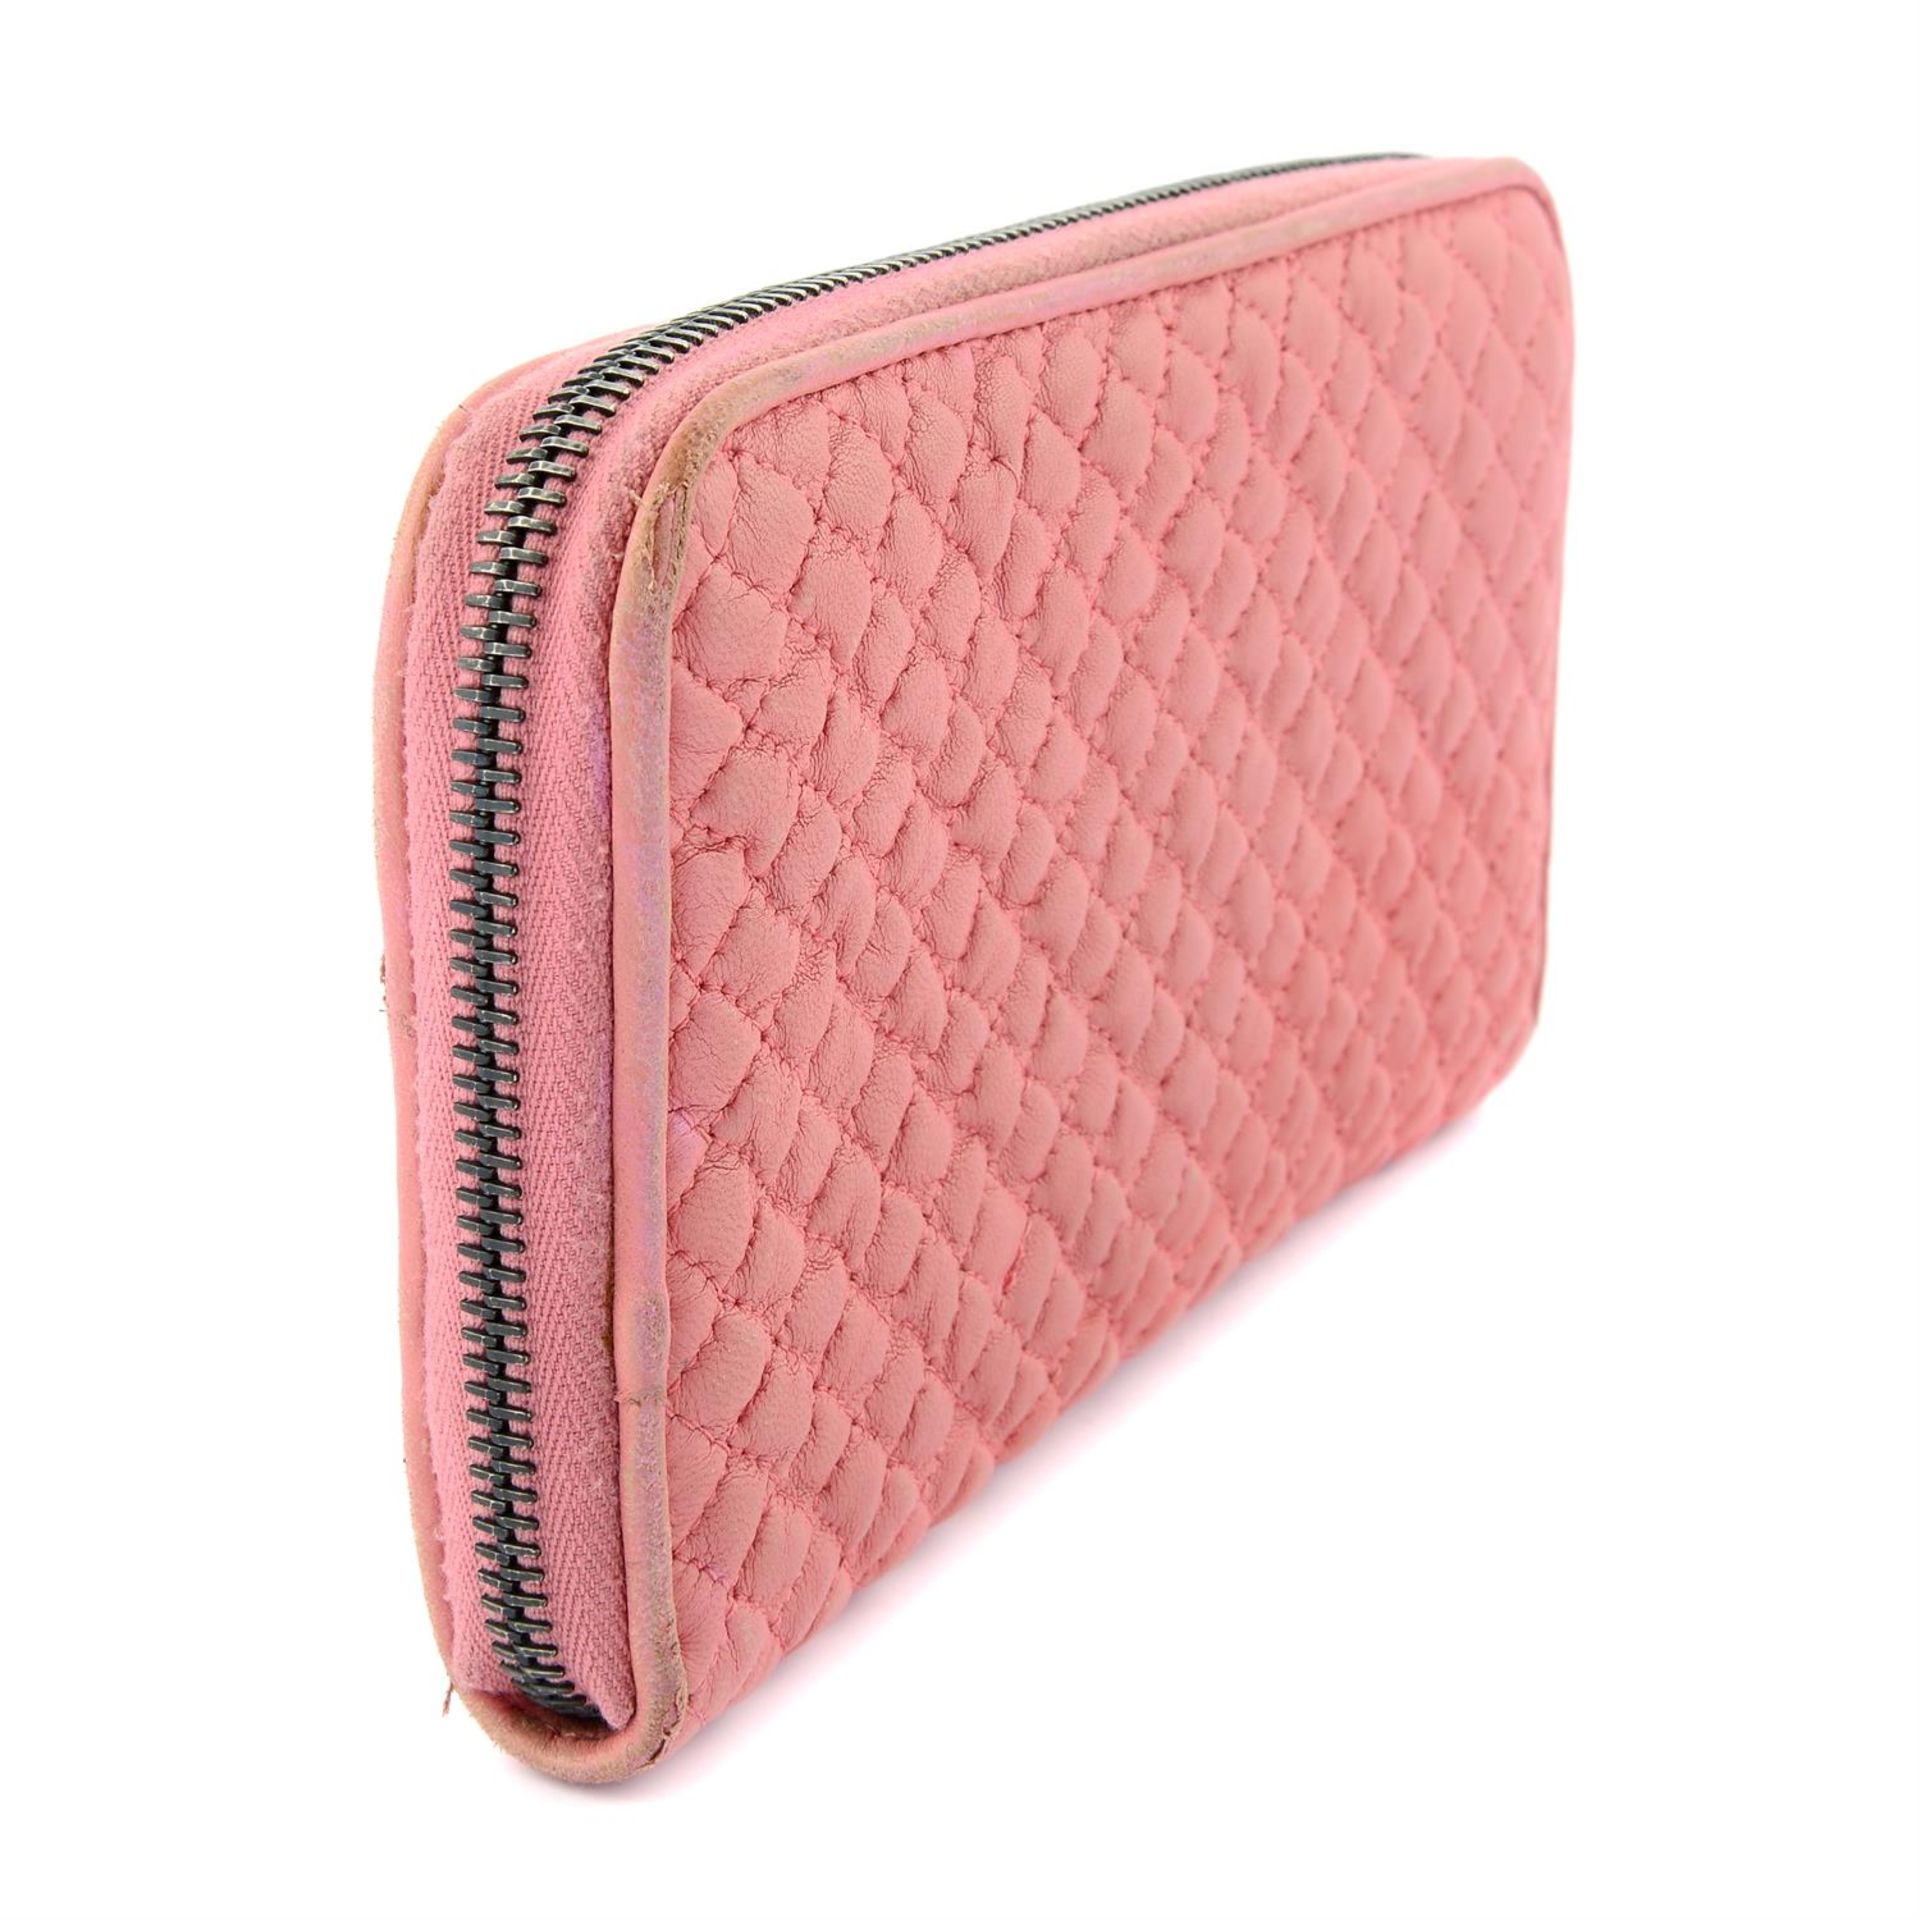 BOTTEGA VENETA - a pink leather wallet. - Image 3 of 4